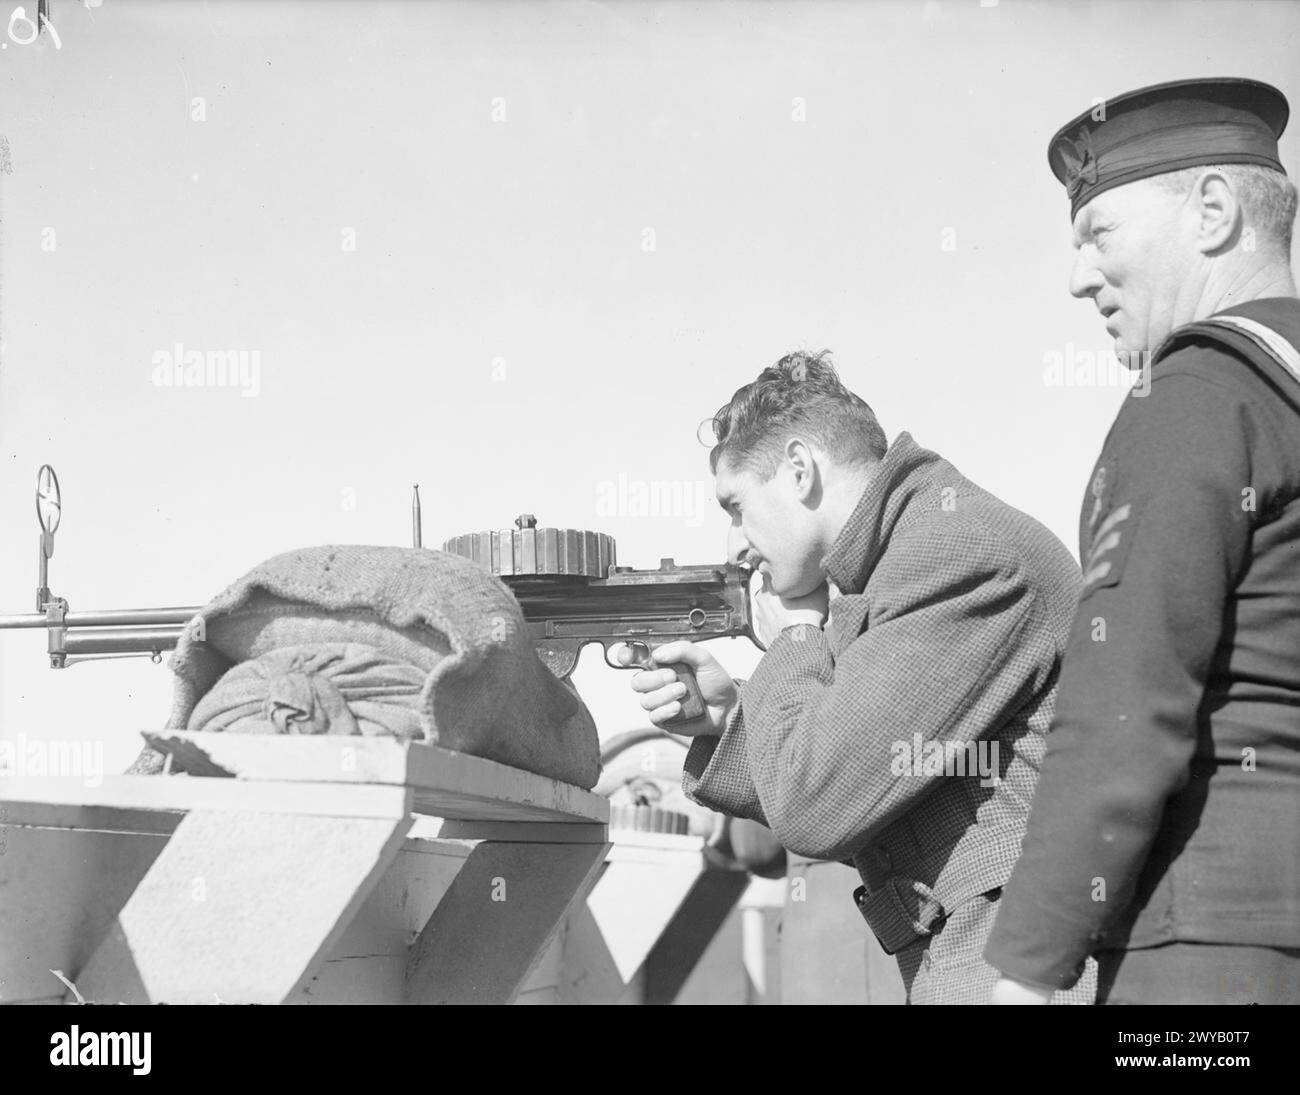 GUNNERY SCHOOL FOR INTER-ALLIED MERCHANT SEAMEN. 1 AND 2 APRIL 1942, LIVERPOOL. - A Merchant sailor firing a Lewis gun on the range. , Stock Photo